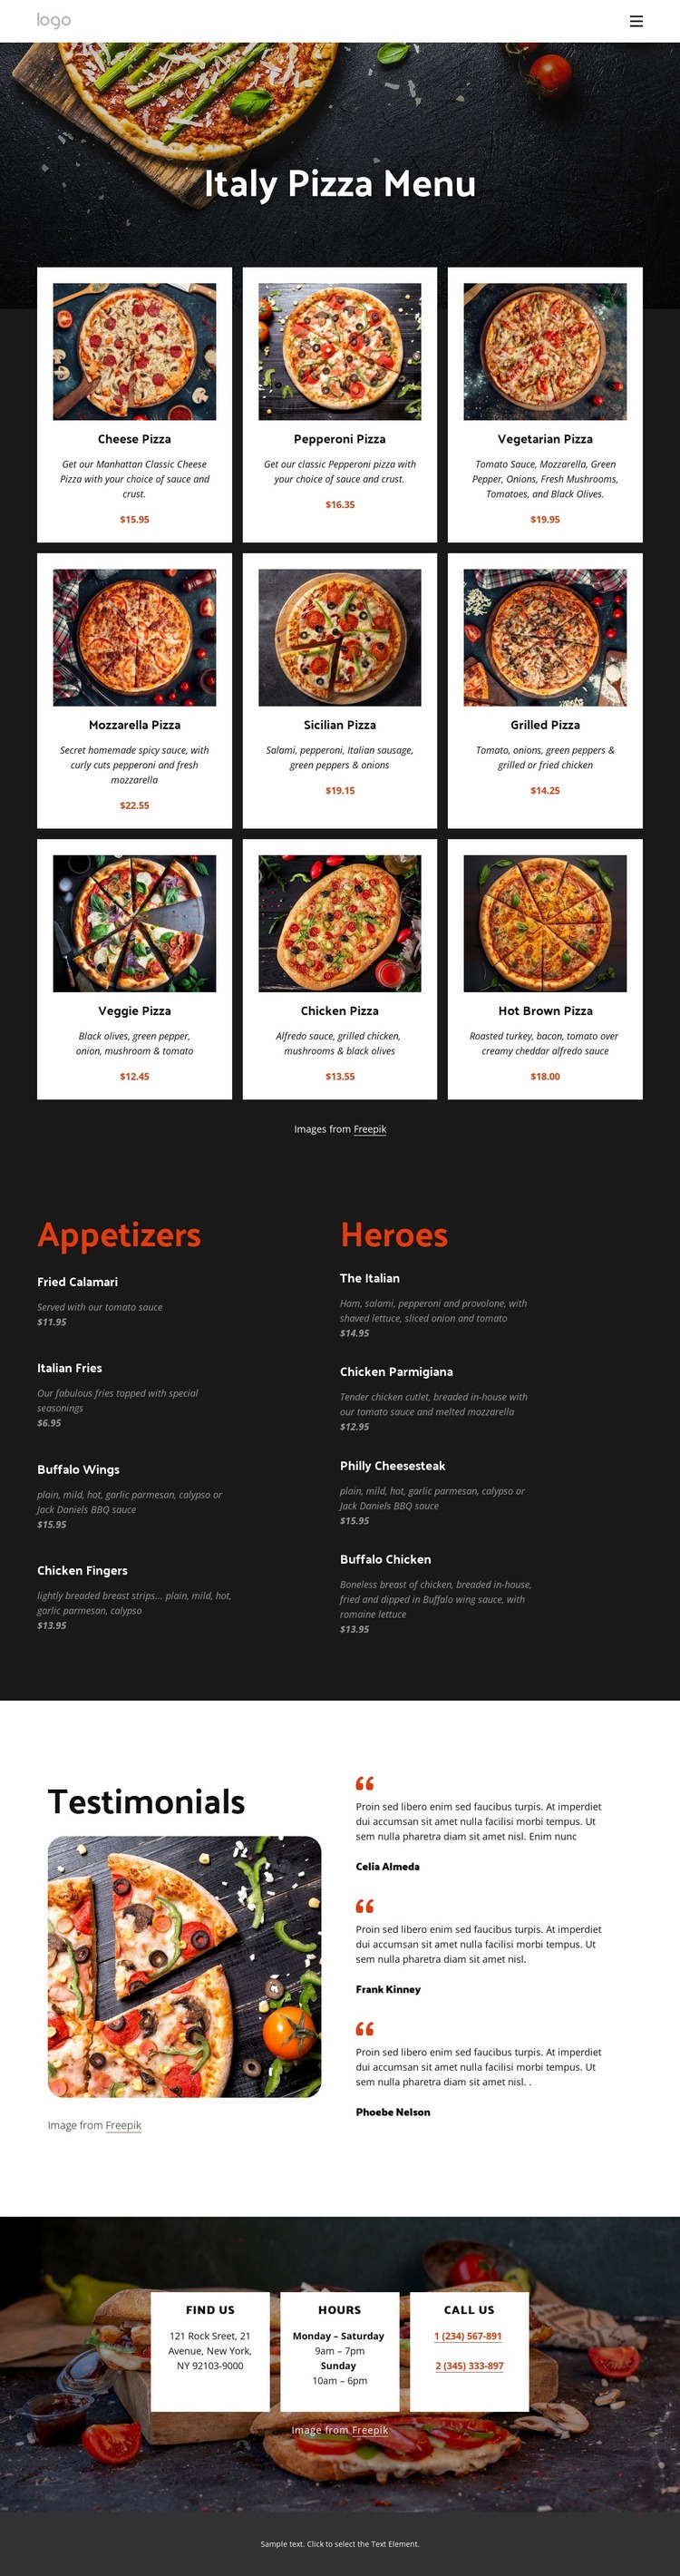 Our pizza menu Website Mockup